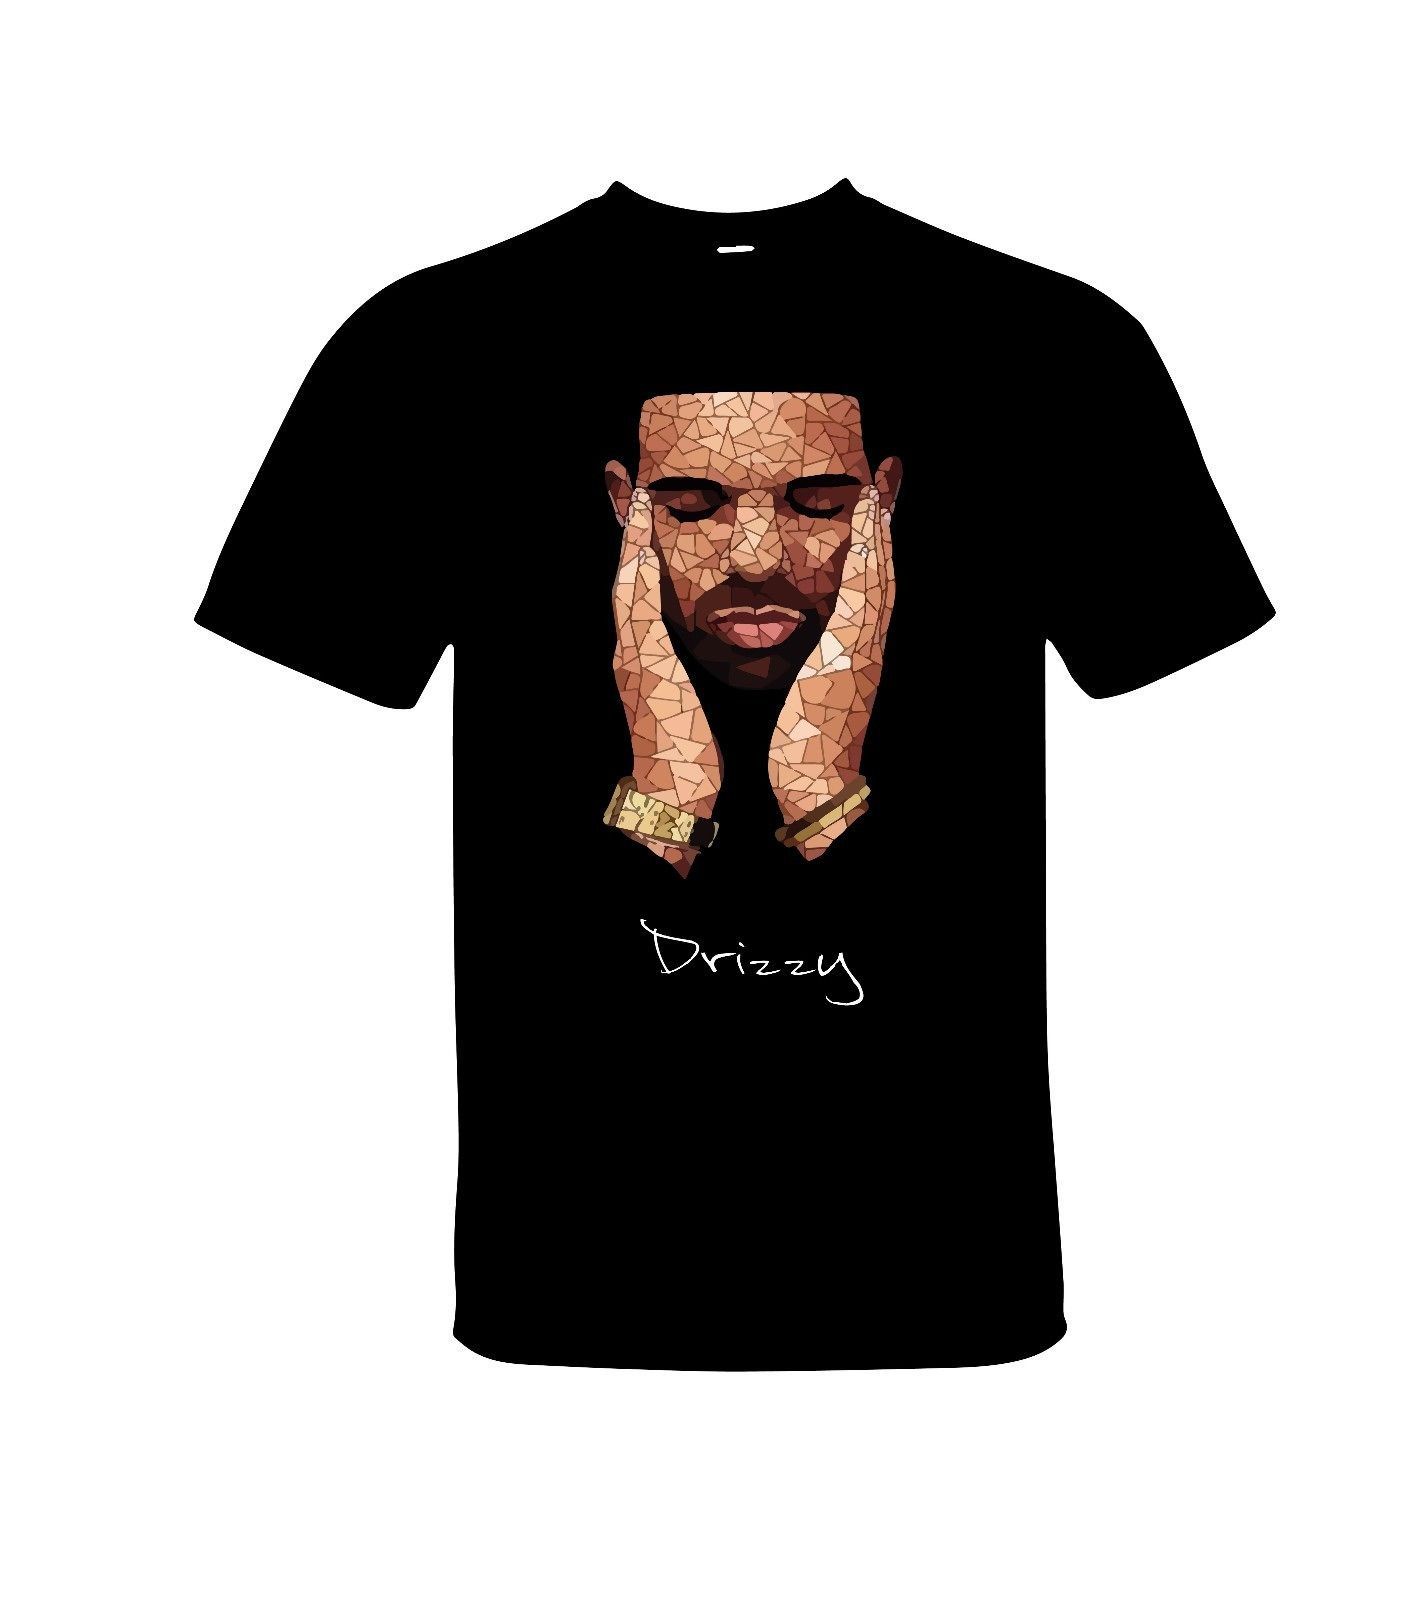 Drizzy Drake Rapper OVO Mosaic Hotline Bling High Quality Unisex TShirt Brand Shirts Jeans Classic Quality High Print From Qqq614445917, $16.24 | DHgate.Com